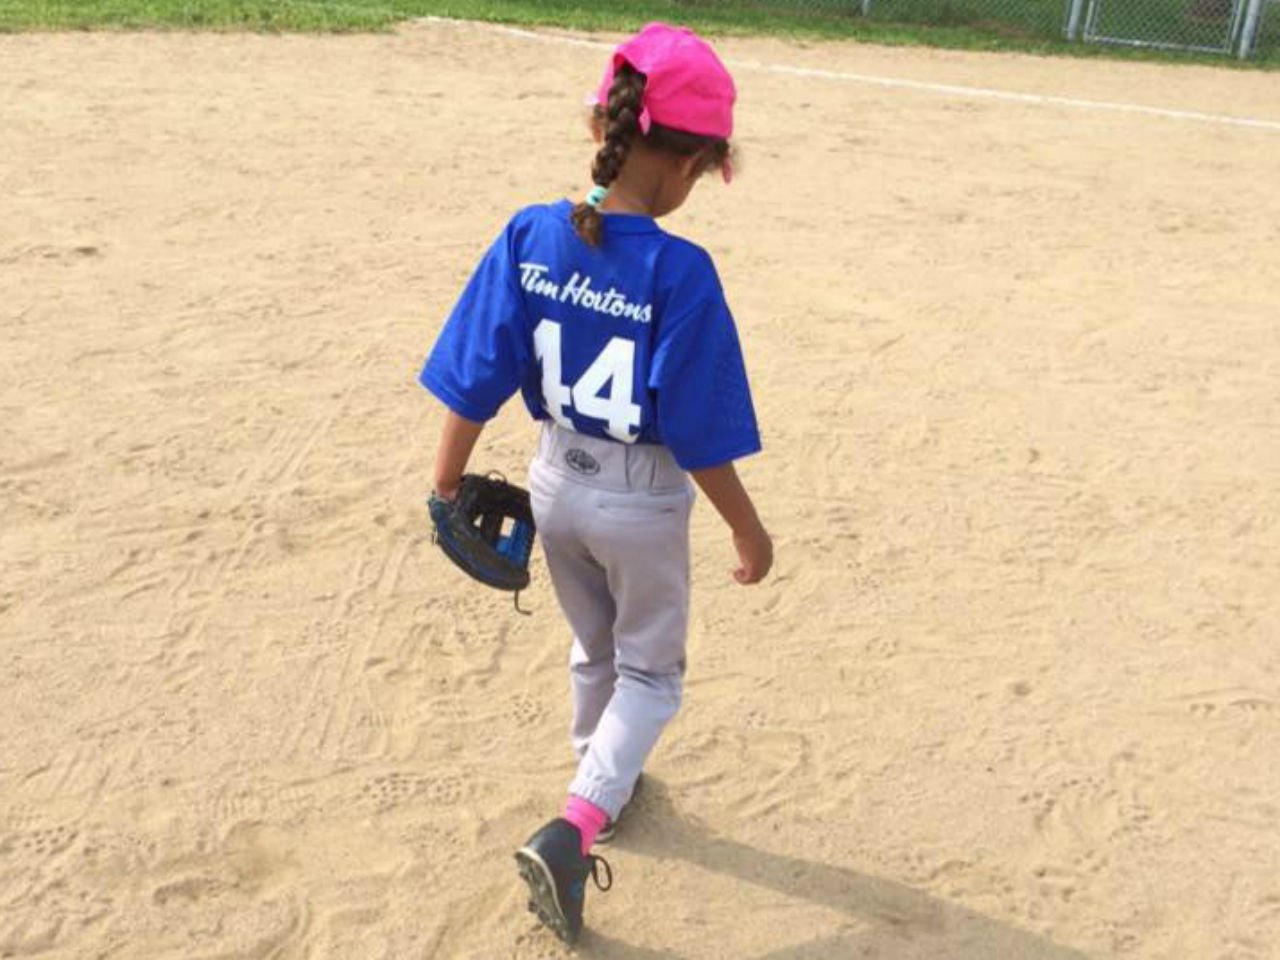 a little girl is playing baseball